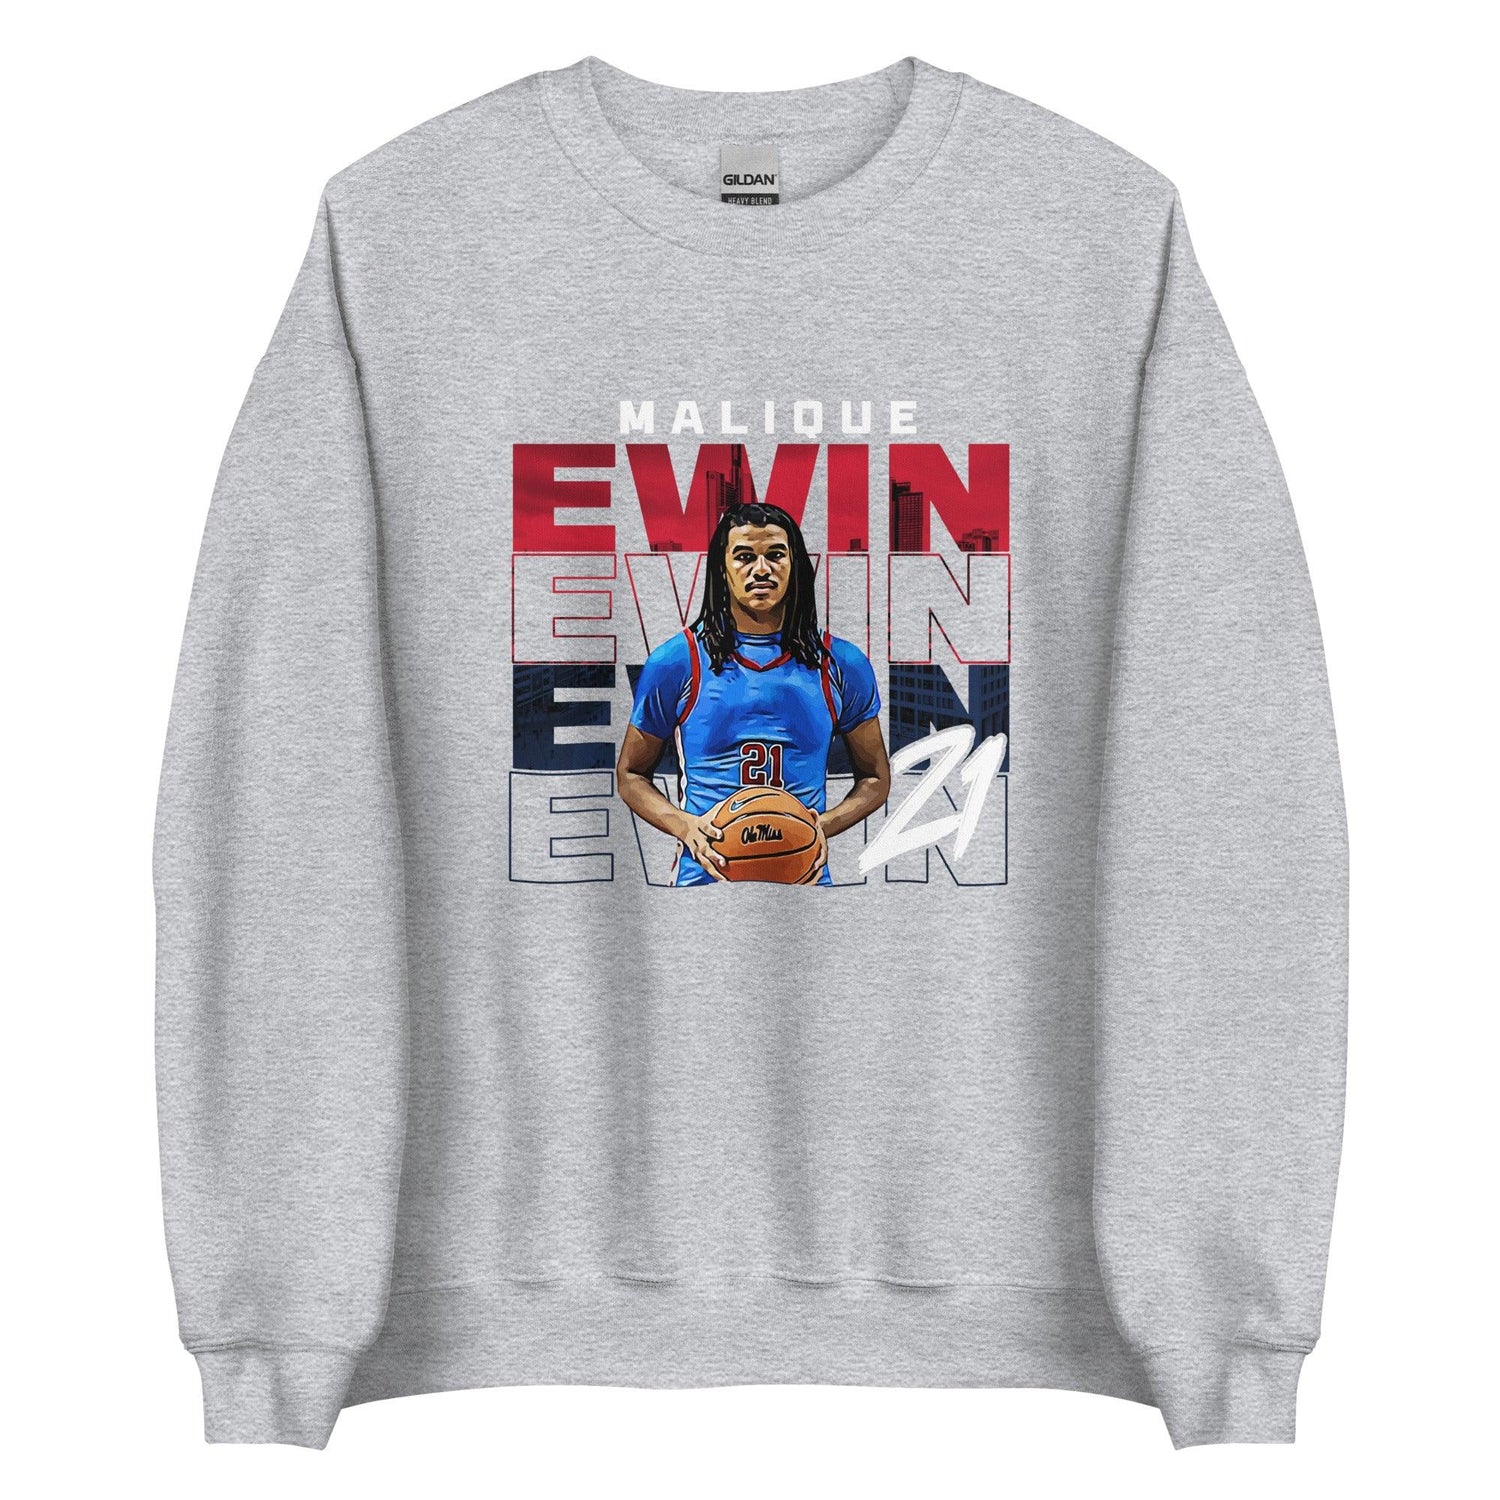 Malique Ewin "Gameday" Sweatshirt - Fan Arch